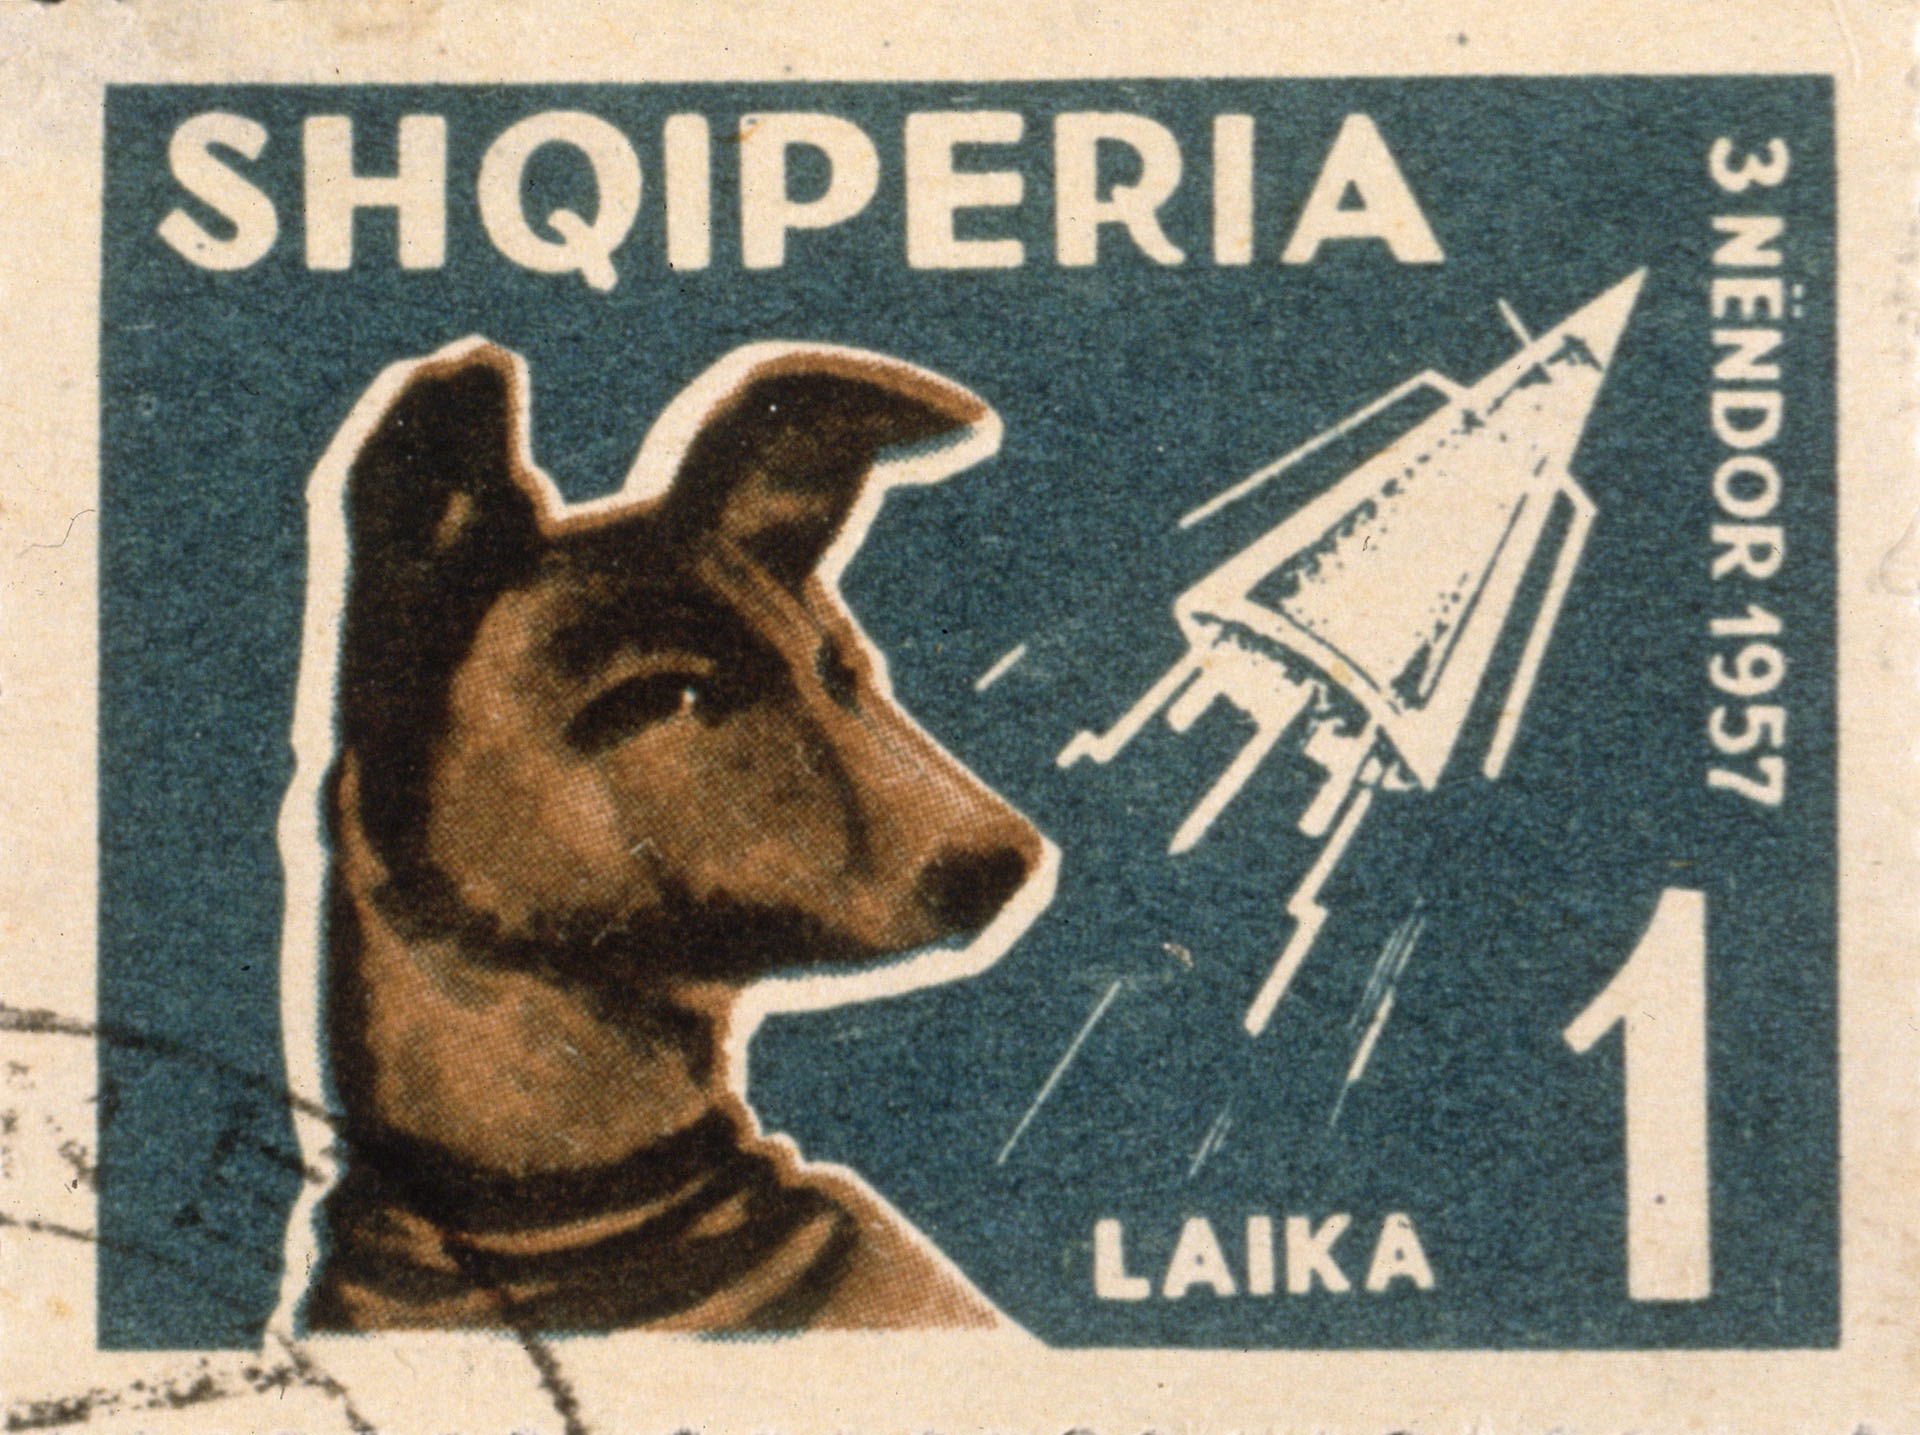 Una estampilla de Albania -país satélite de la URSS- de 1957 con Laika. El nombre albanés era Shqiperia (Photo by Blank Archives/Getty Images)